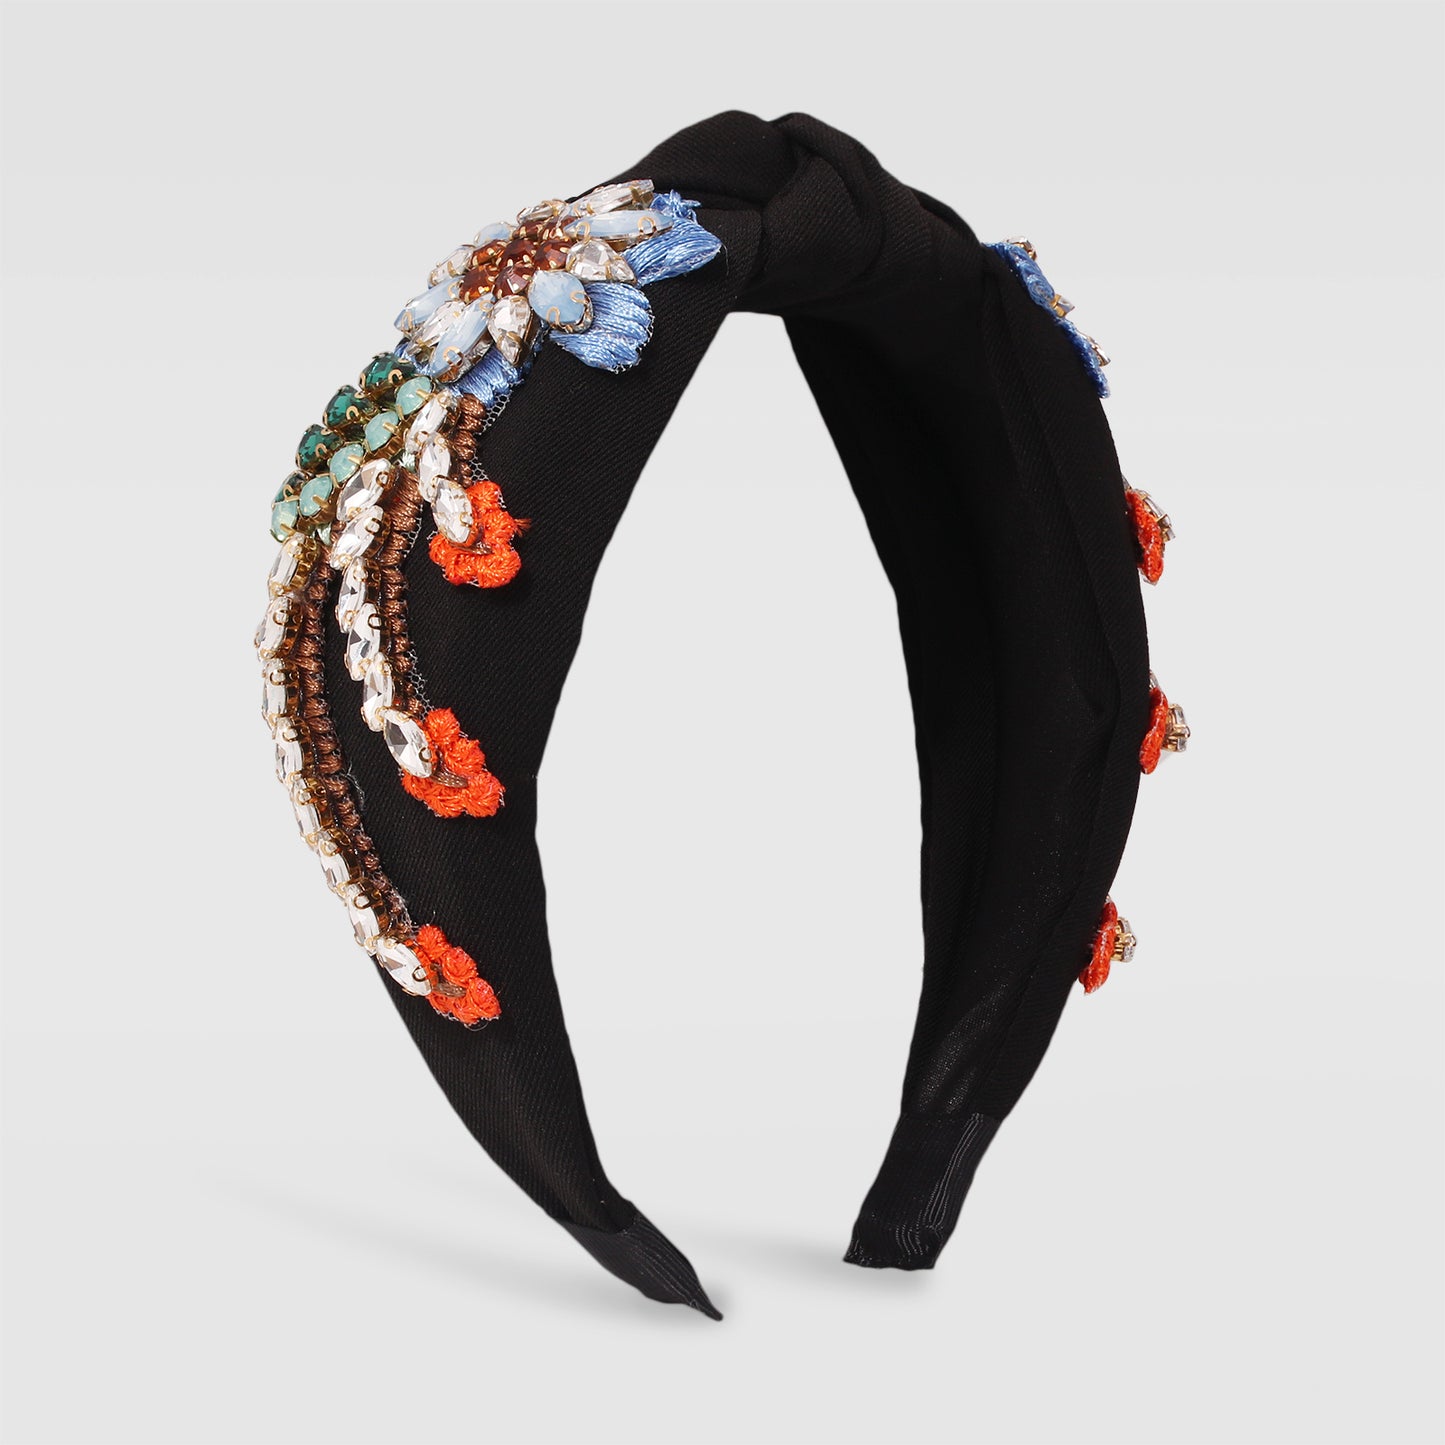 Topknot Rhinestone Flower Embellished Sparkly Crystal Wide Headband medyjewelry